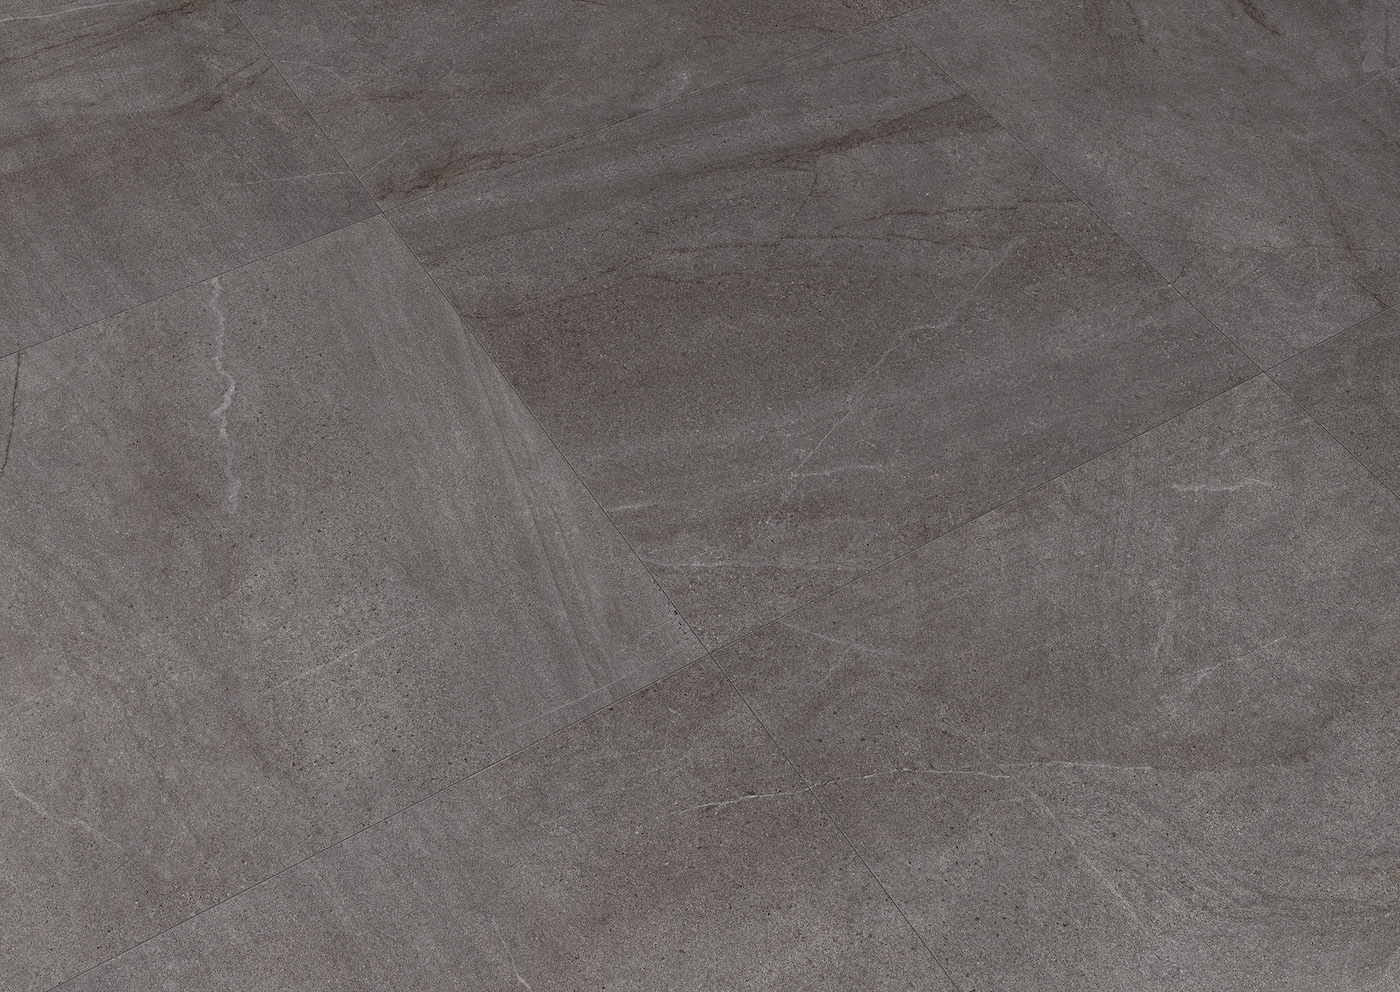 Hygge #6MM basalt 120x120 flooring, 6mm